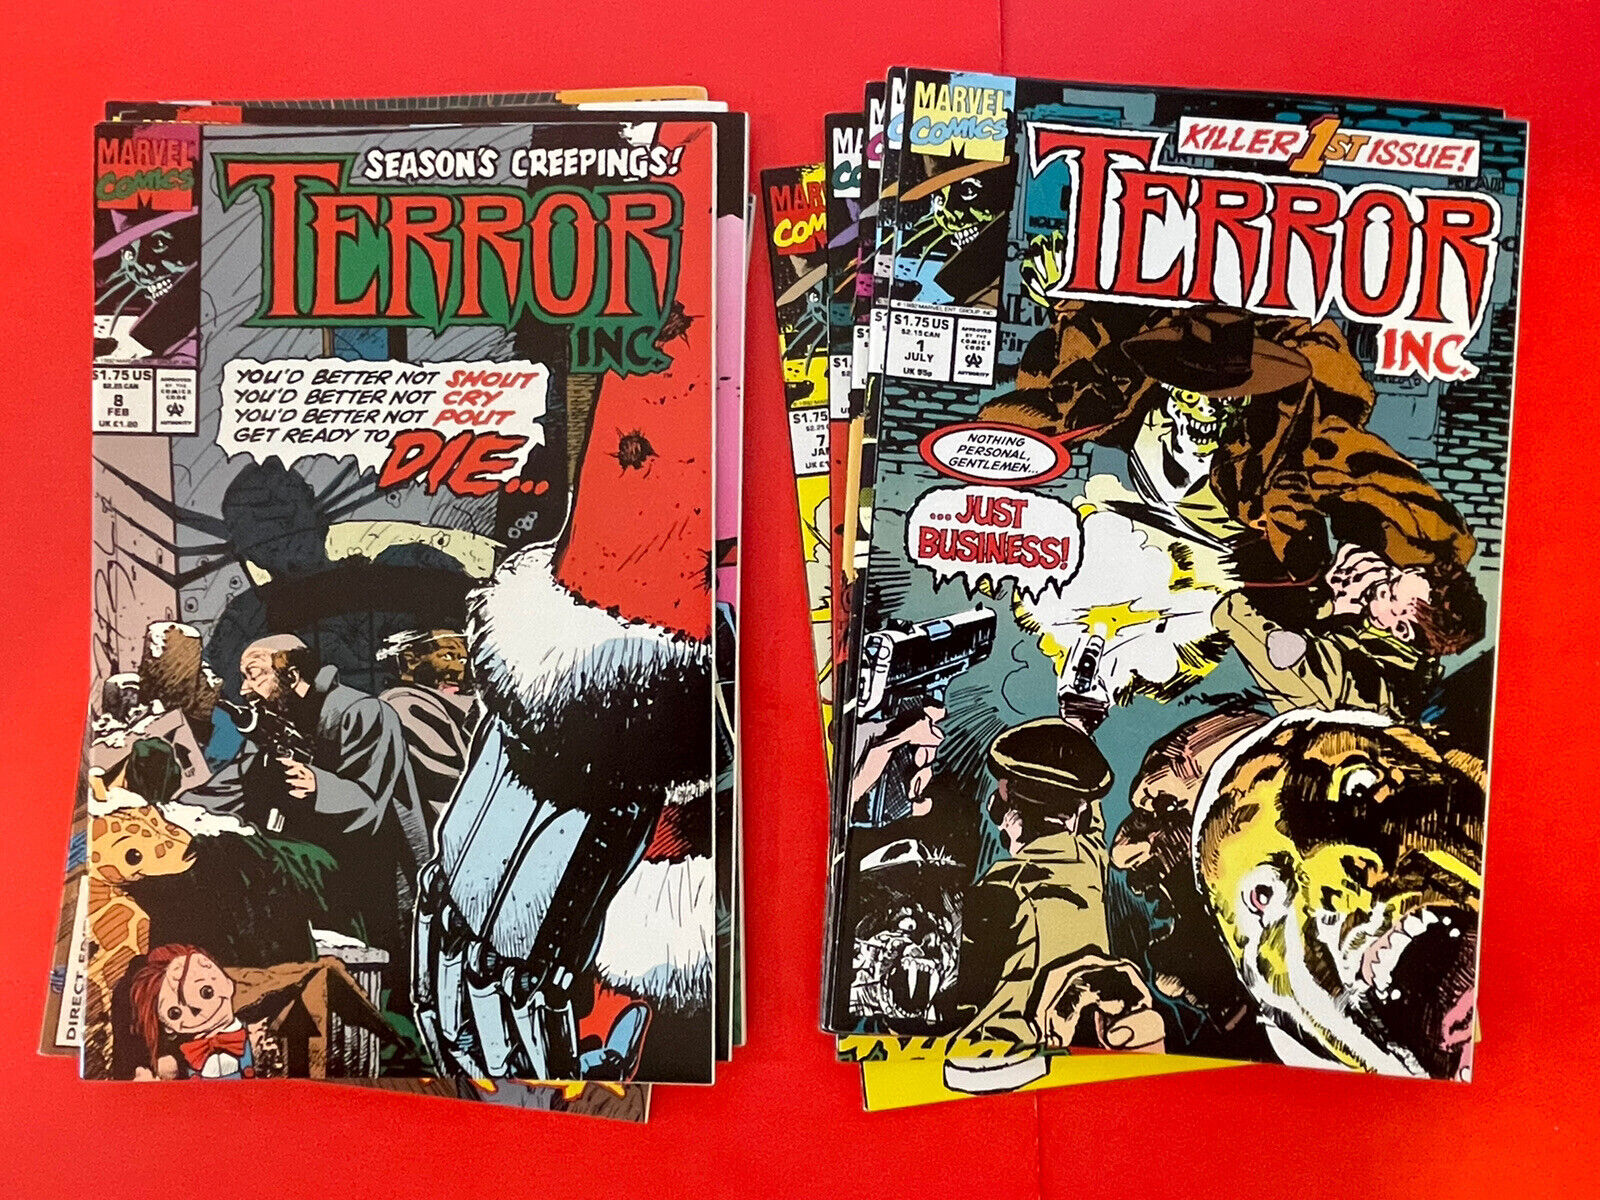 TERROR INC. # 1 - 13  MARVEL COMIC BOOKS ( 12 issues)  - 1992 series